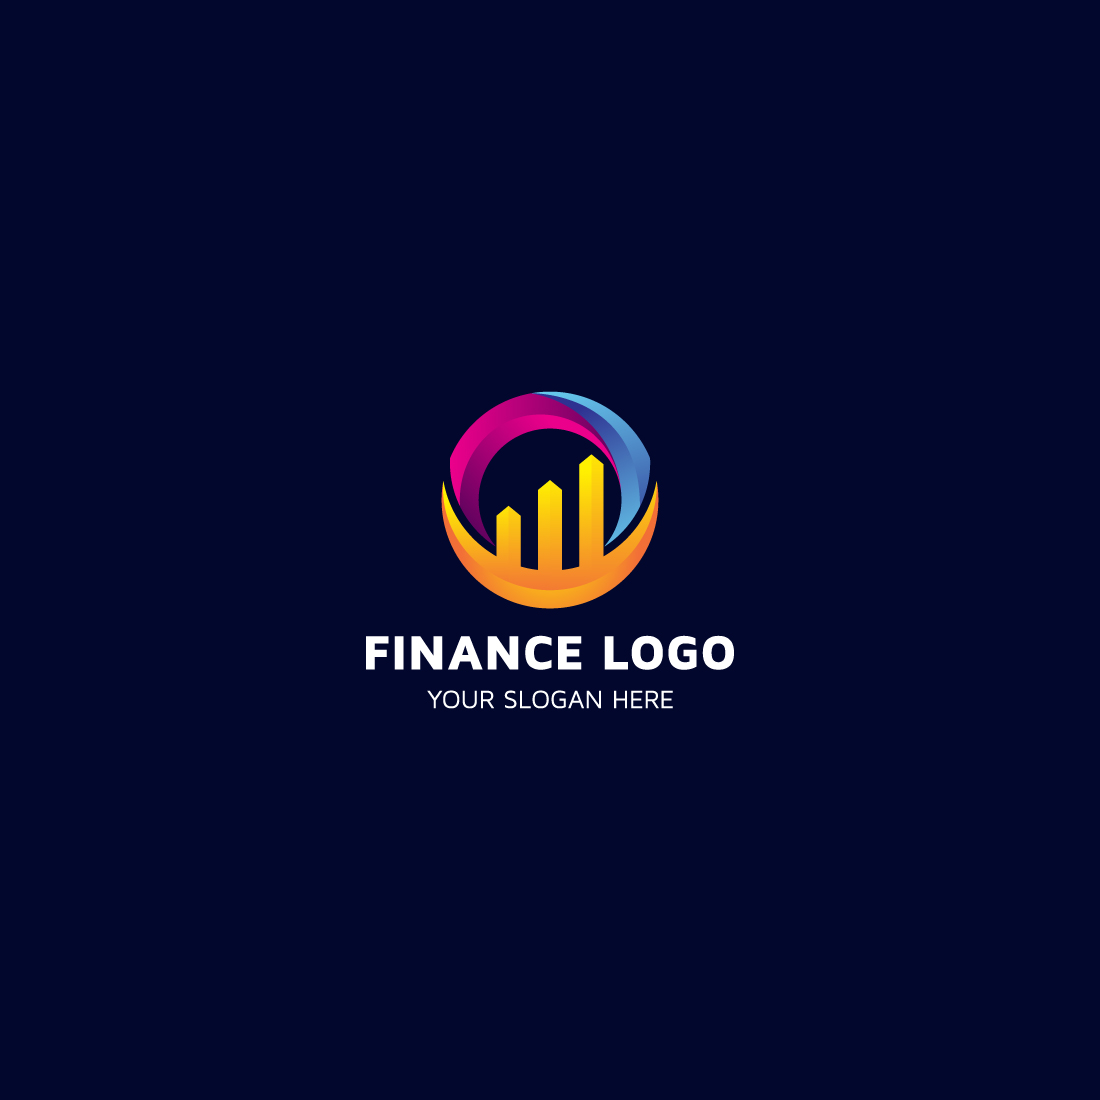 Business & Finance Symbols Vector Logo Design cover image.